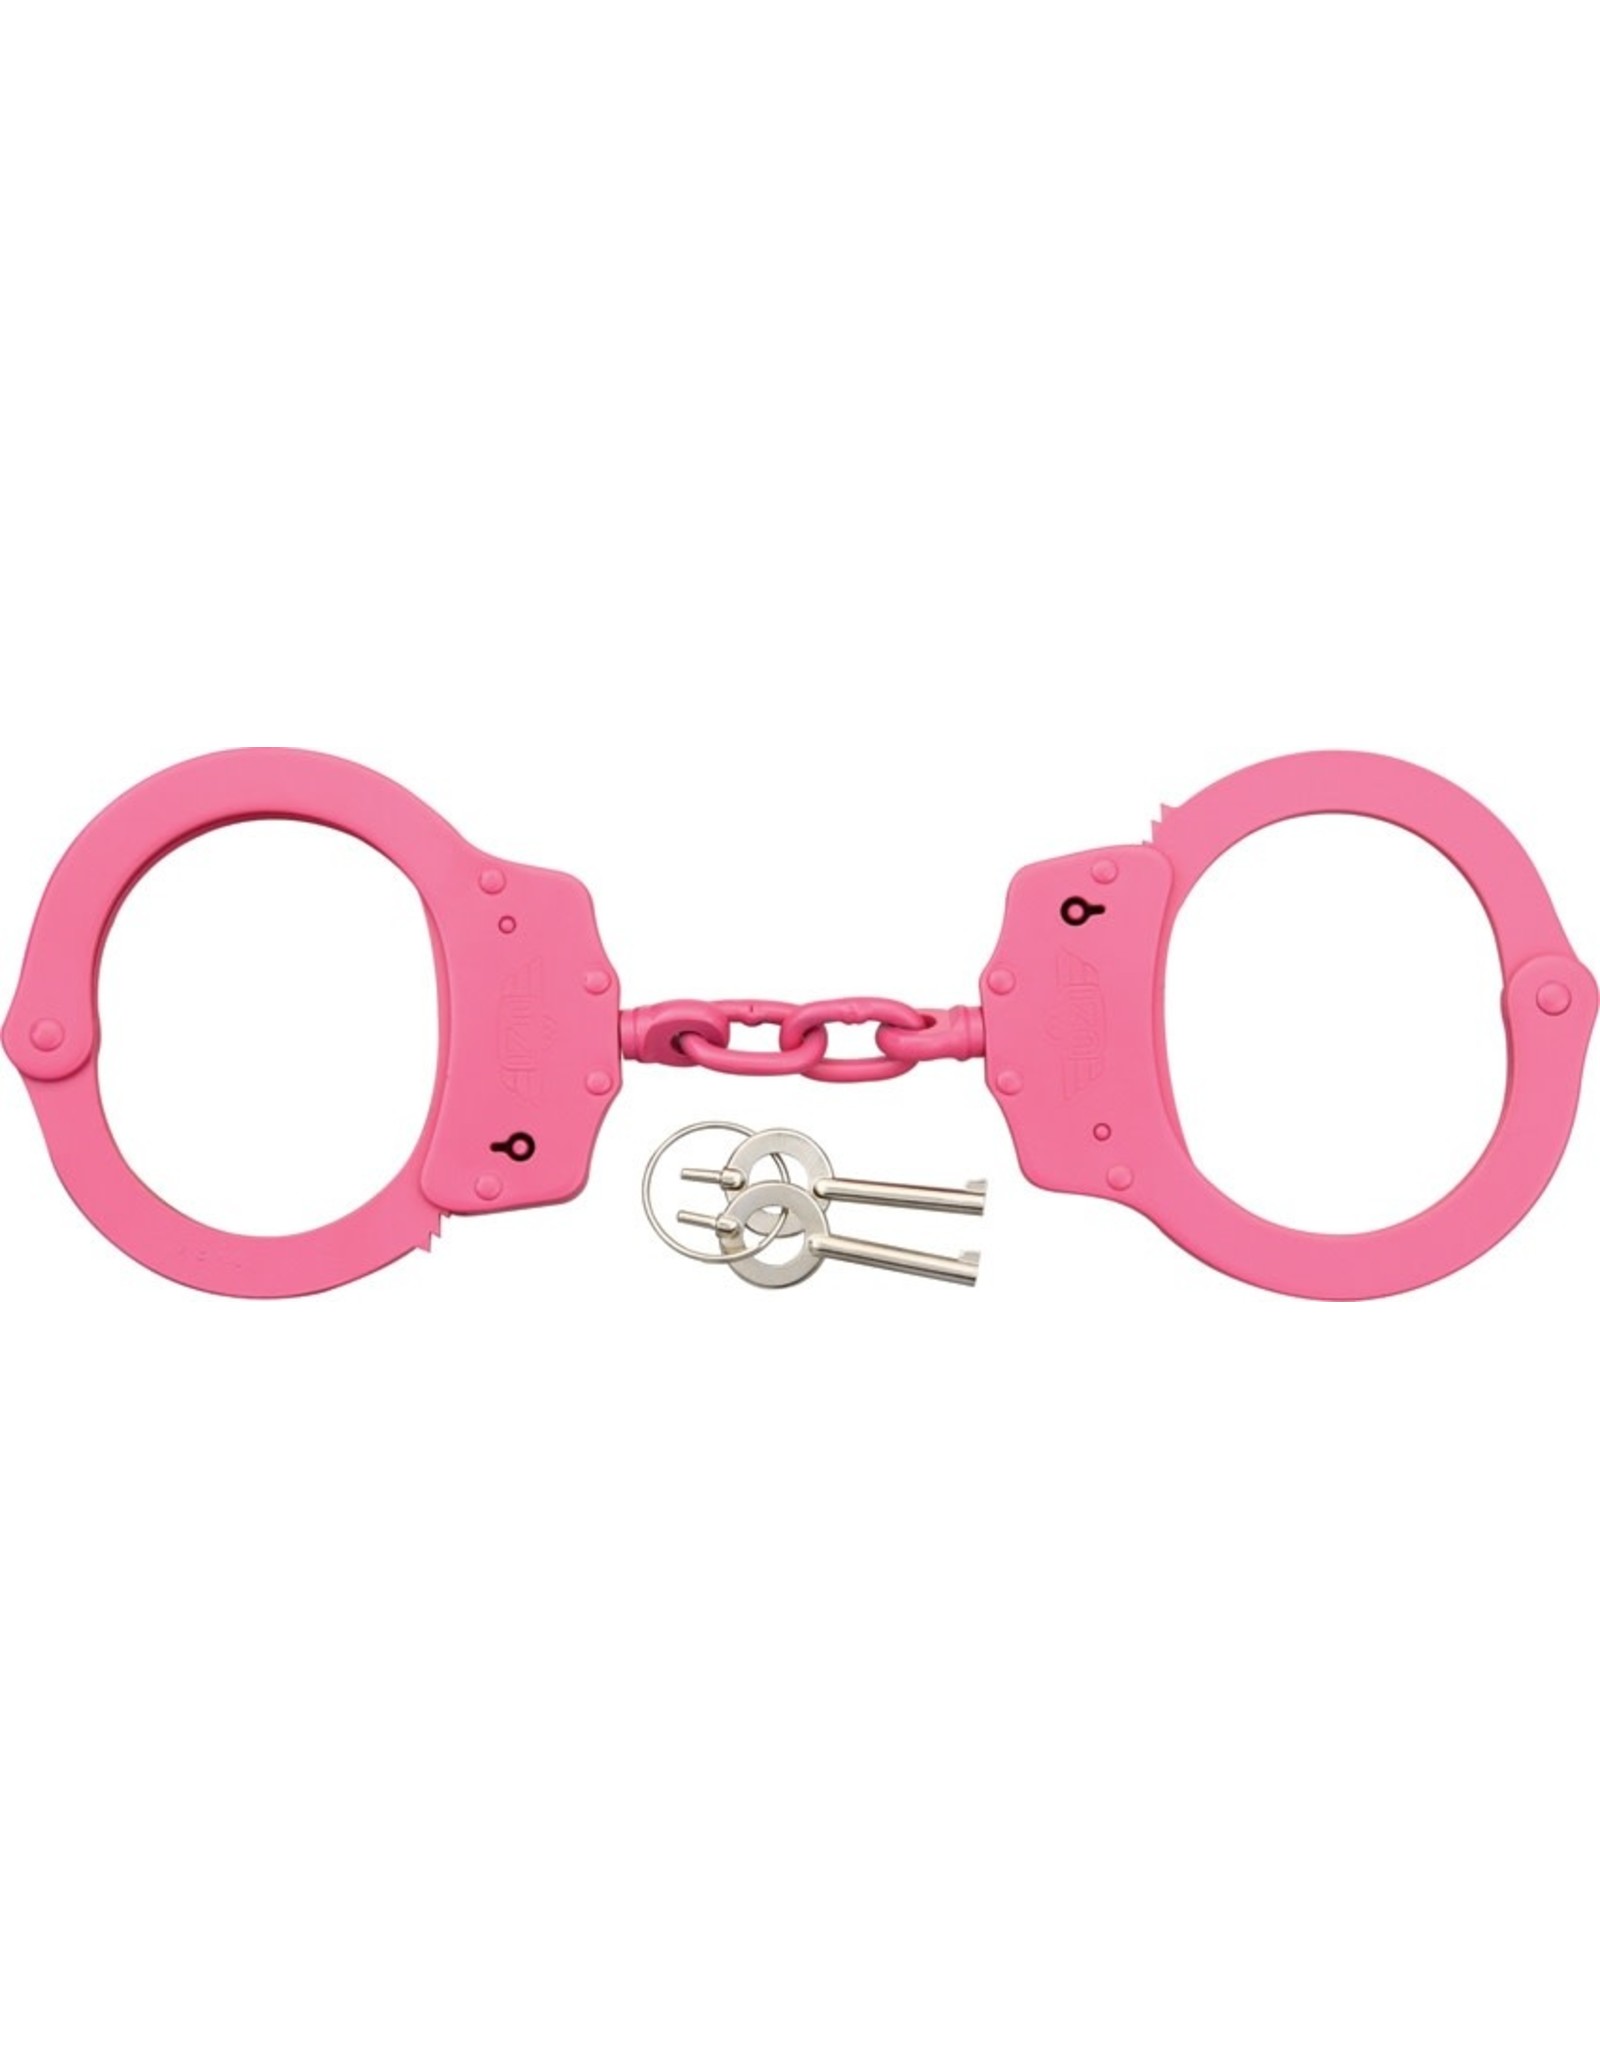 UZI UZI Pink Handcuffs PINK